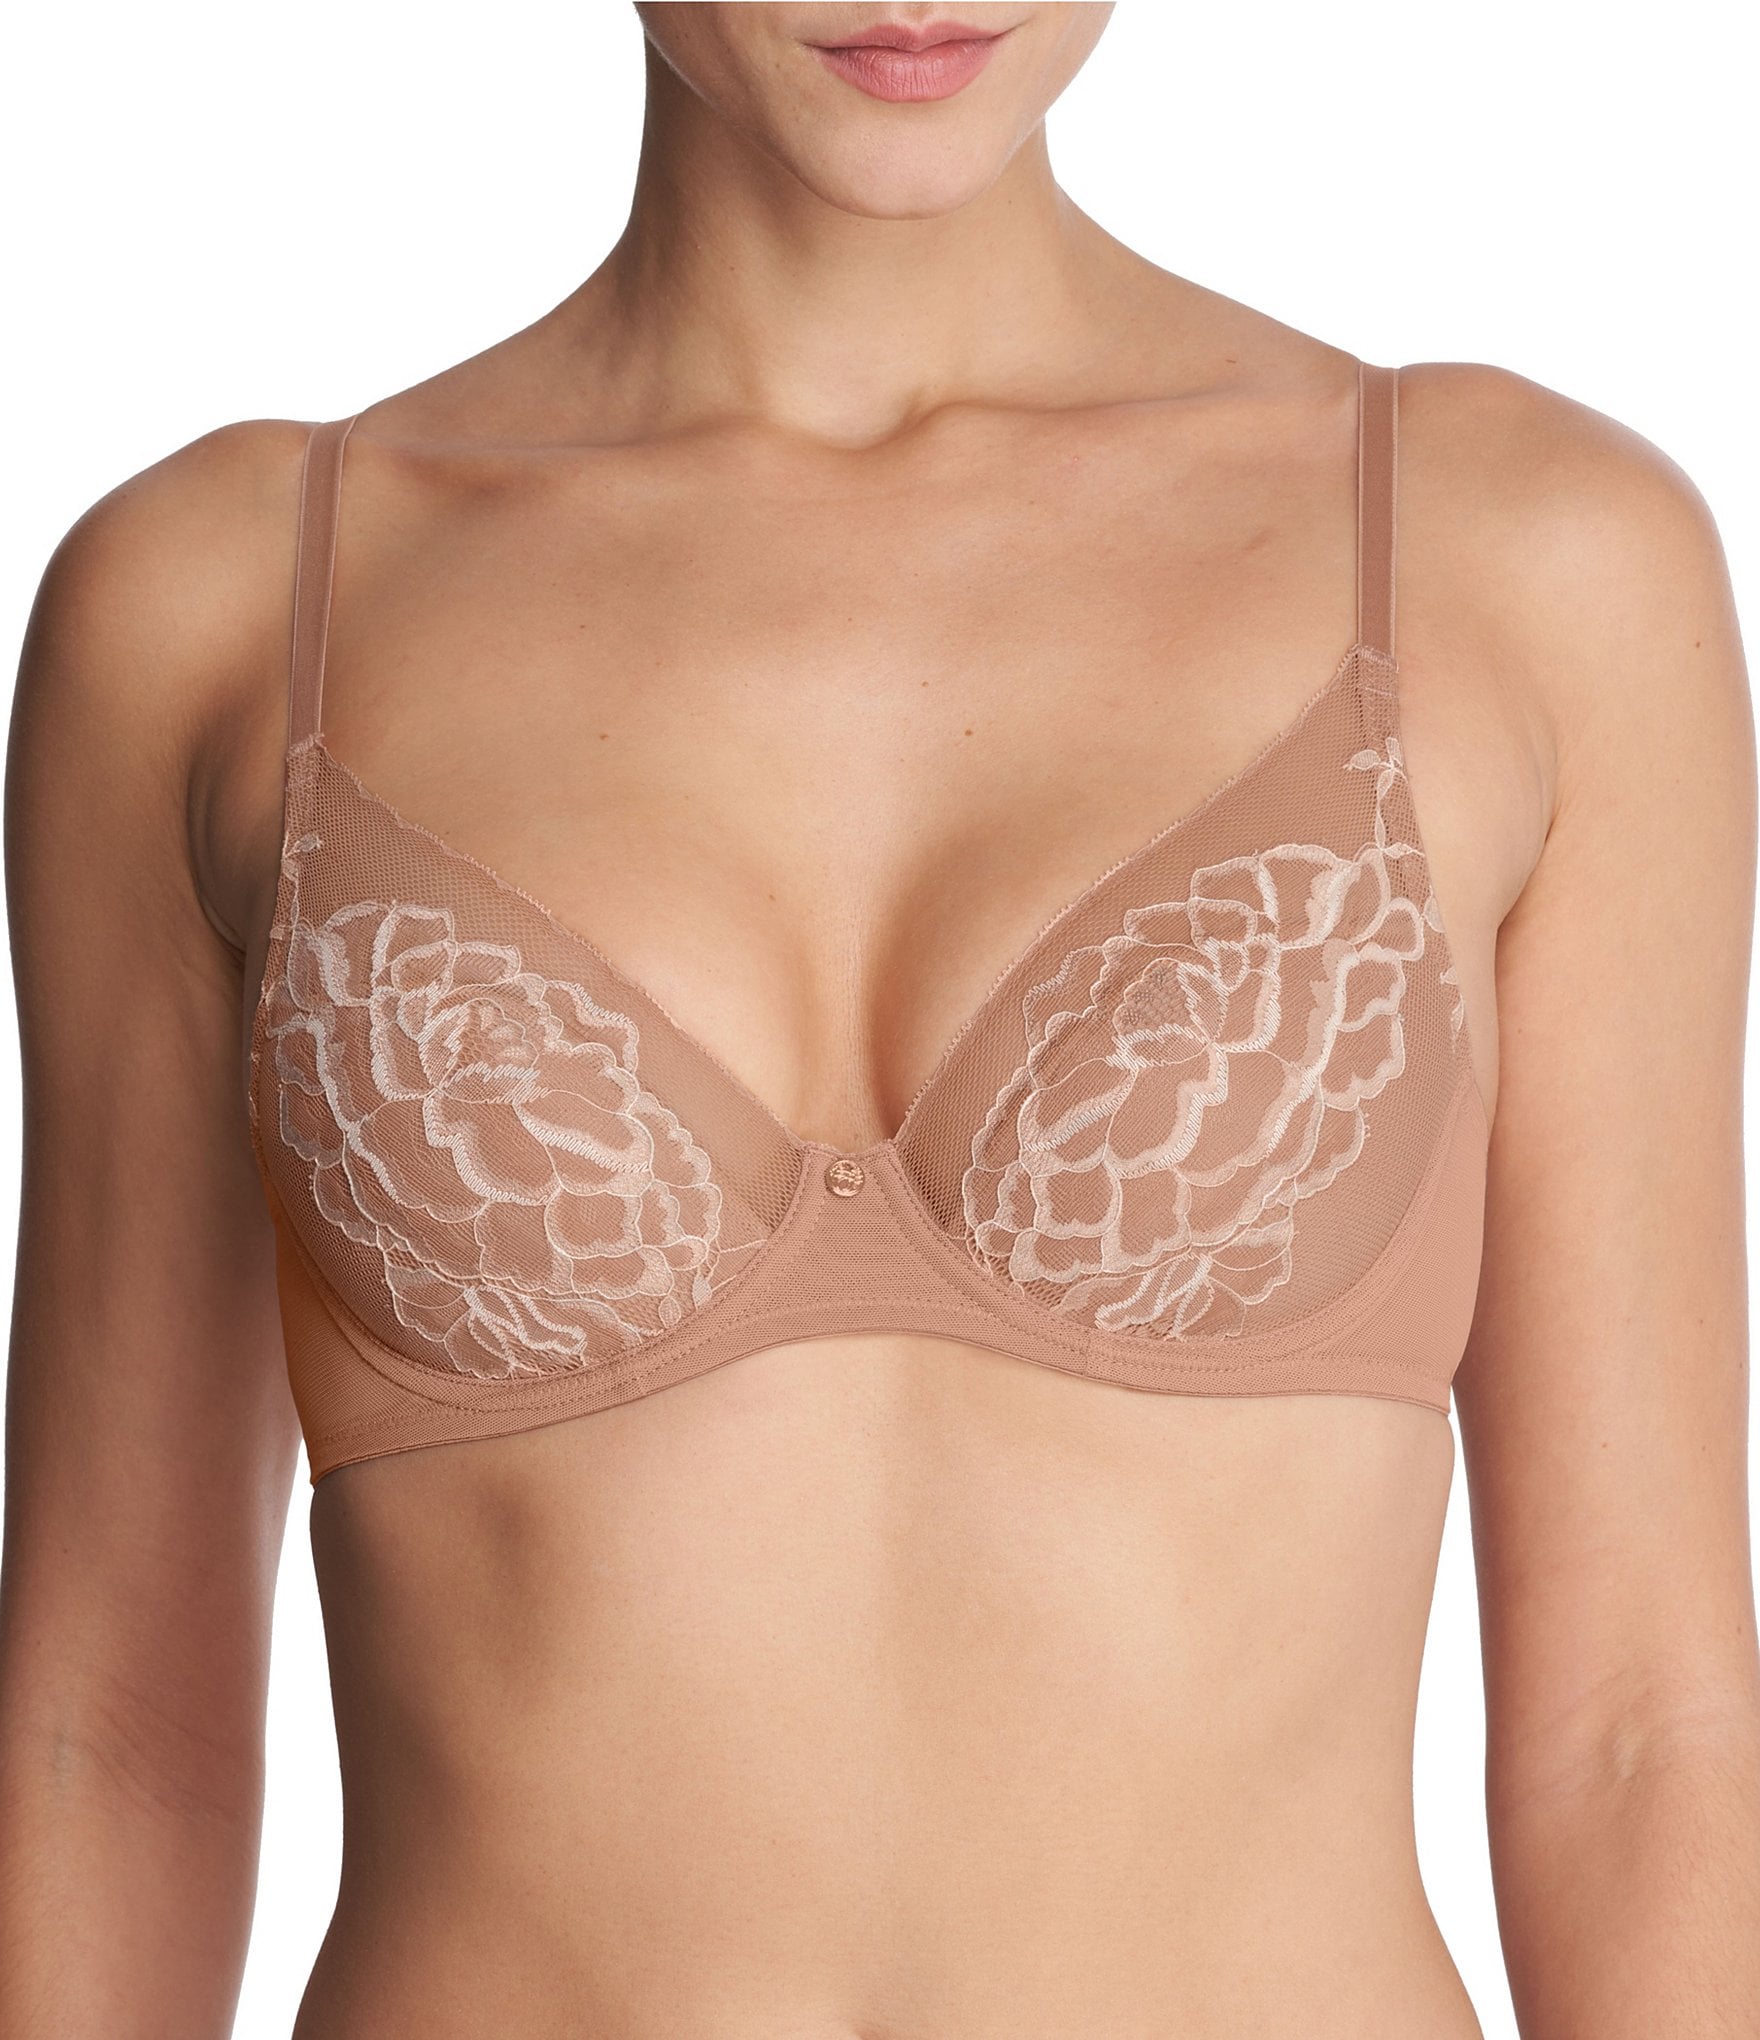 For sale- Natori Flora contour bras size 34DDD in beige/cream and black.  Original price $70/each; asking price $50/each. Worn twice each, like new :  r/braswap